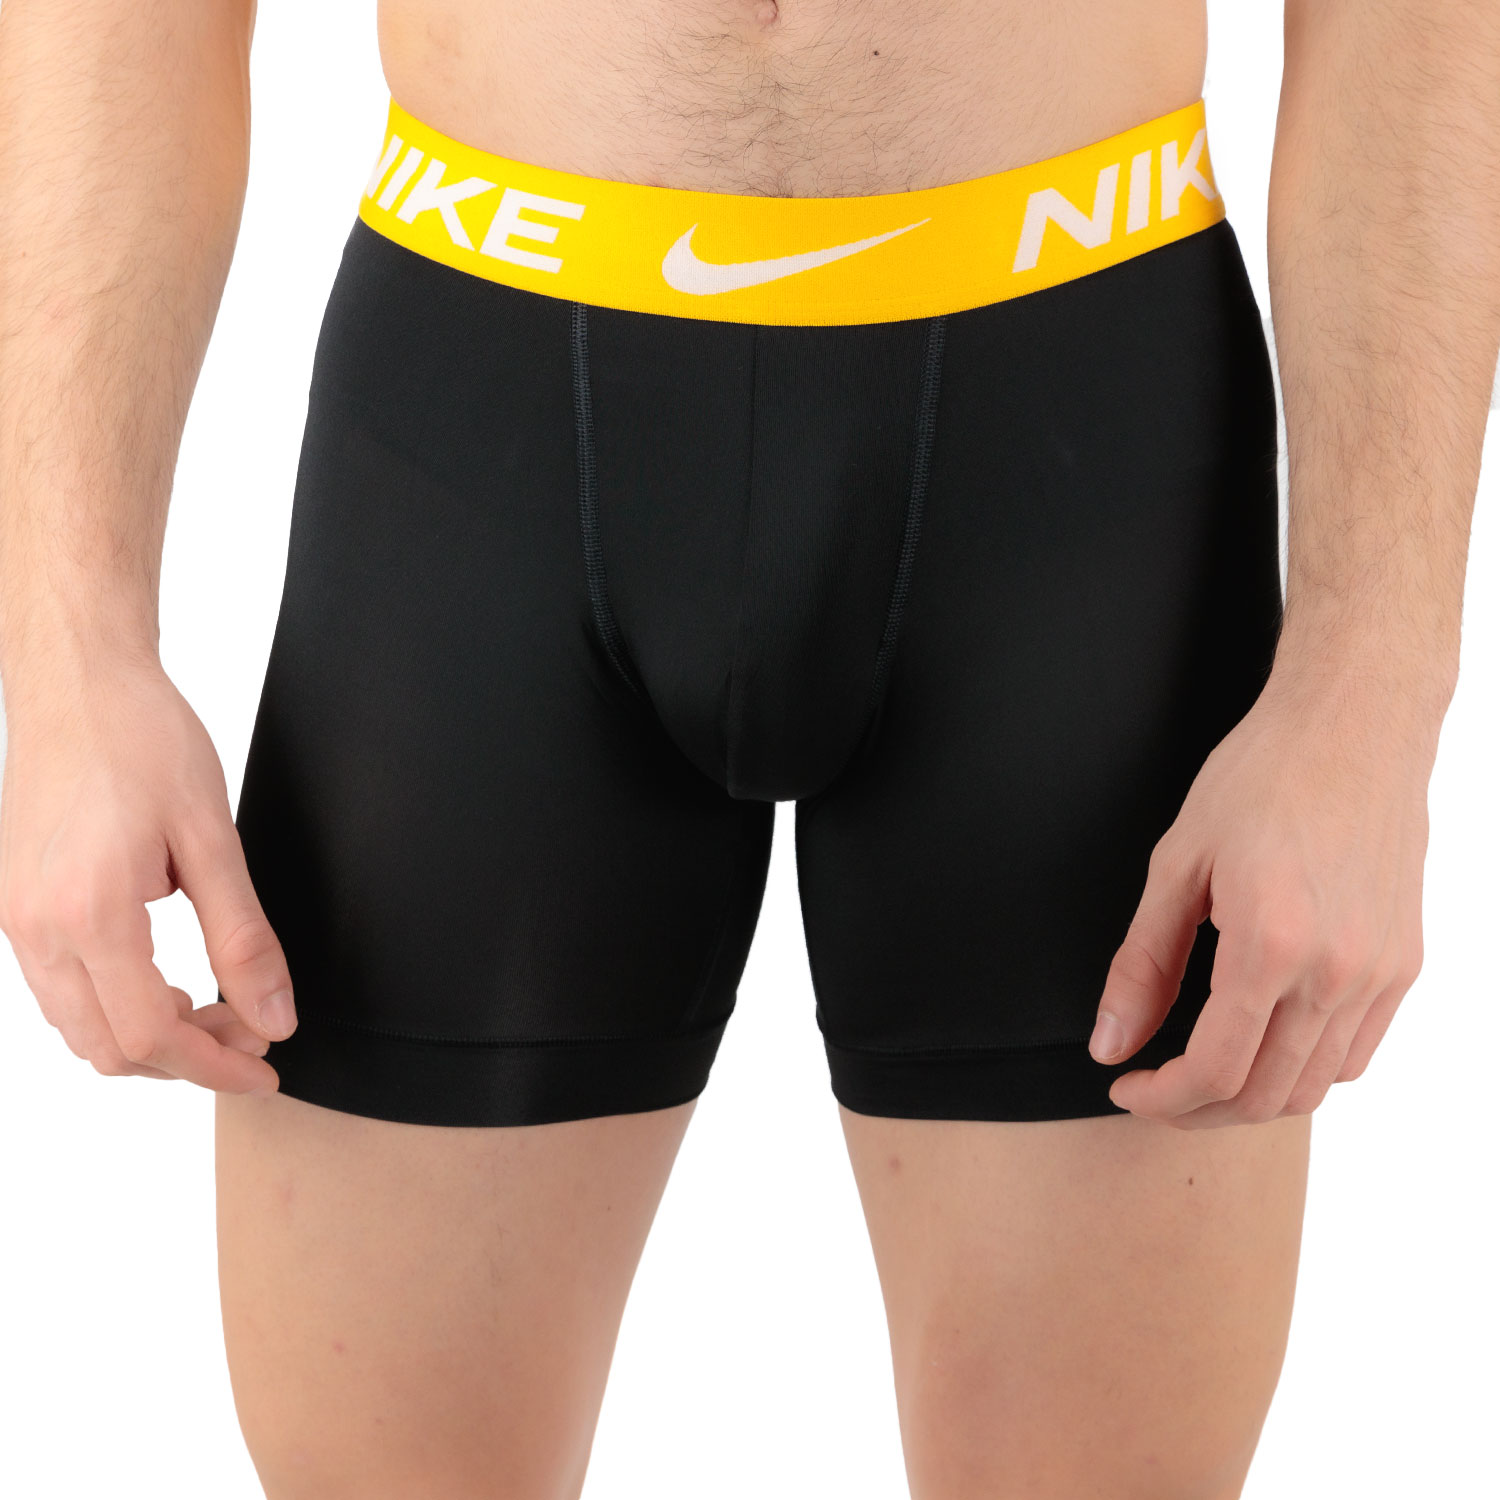 Nike Dri-FIT Performance x 3 Men's Underwear Long Boxers Black